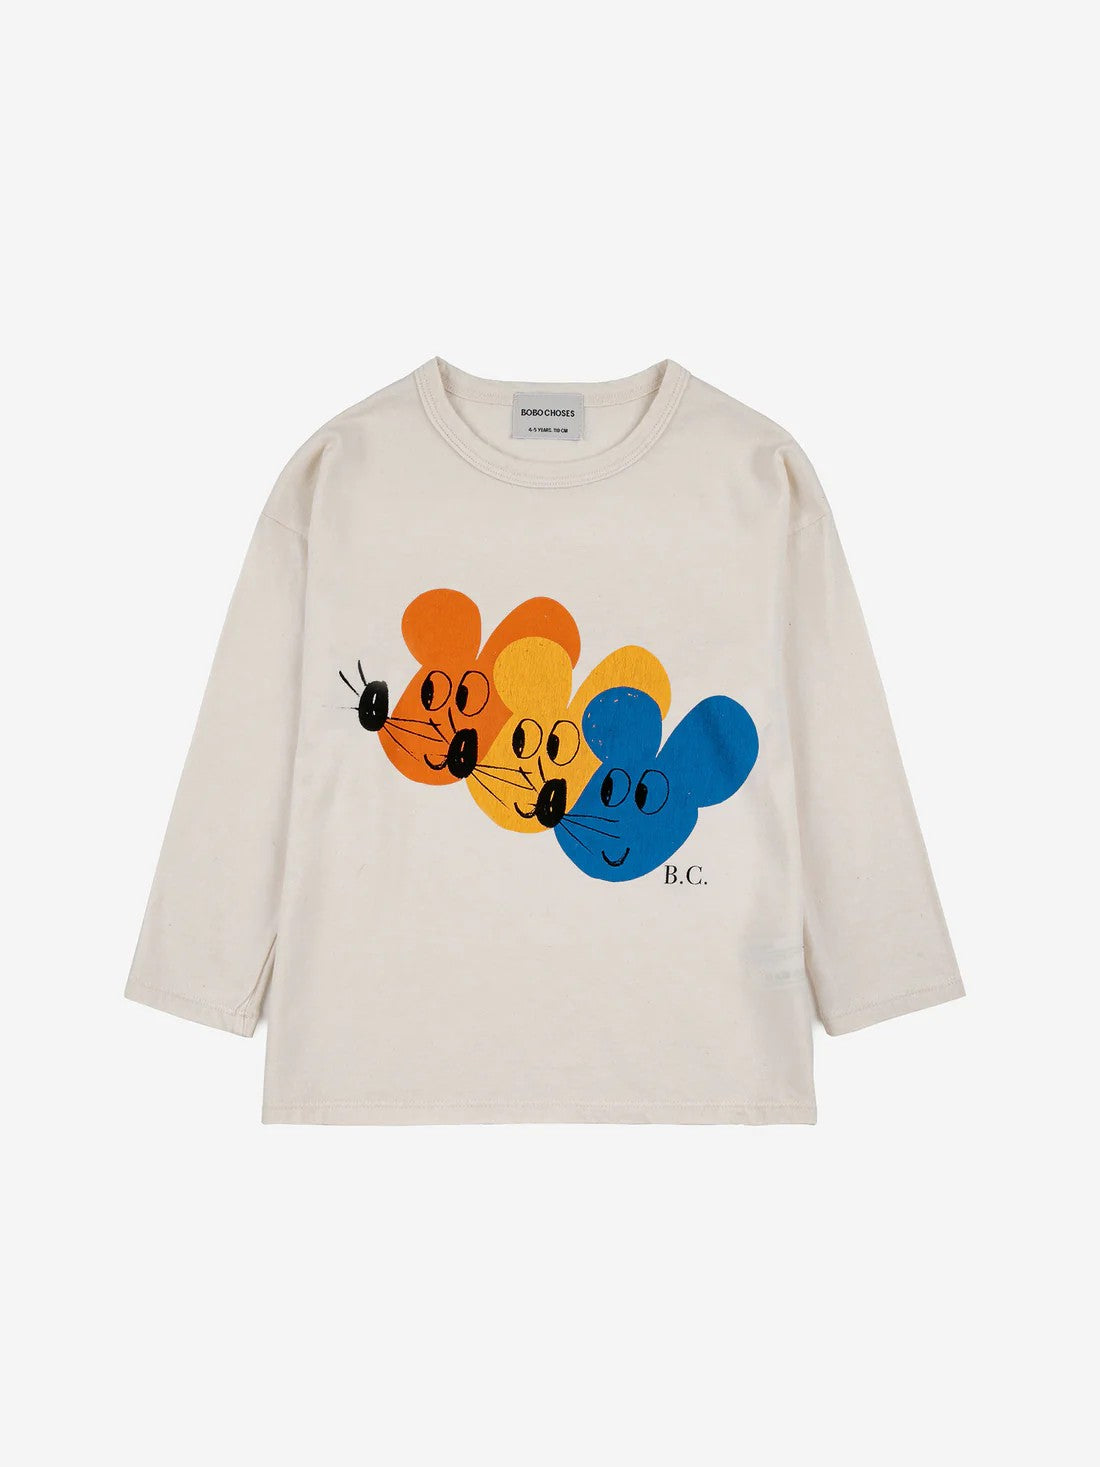 Bobo Choses multicolored mice t-shirt